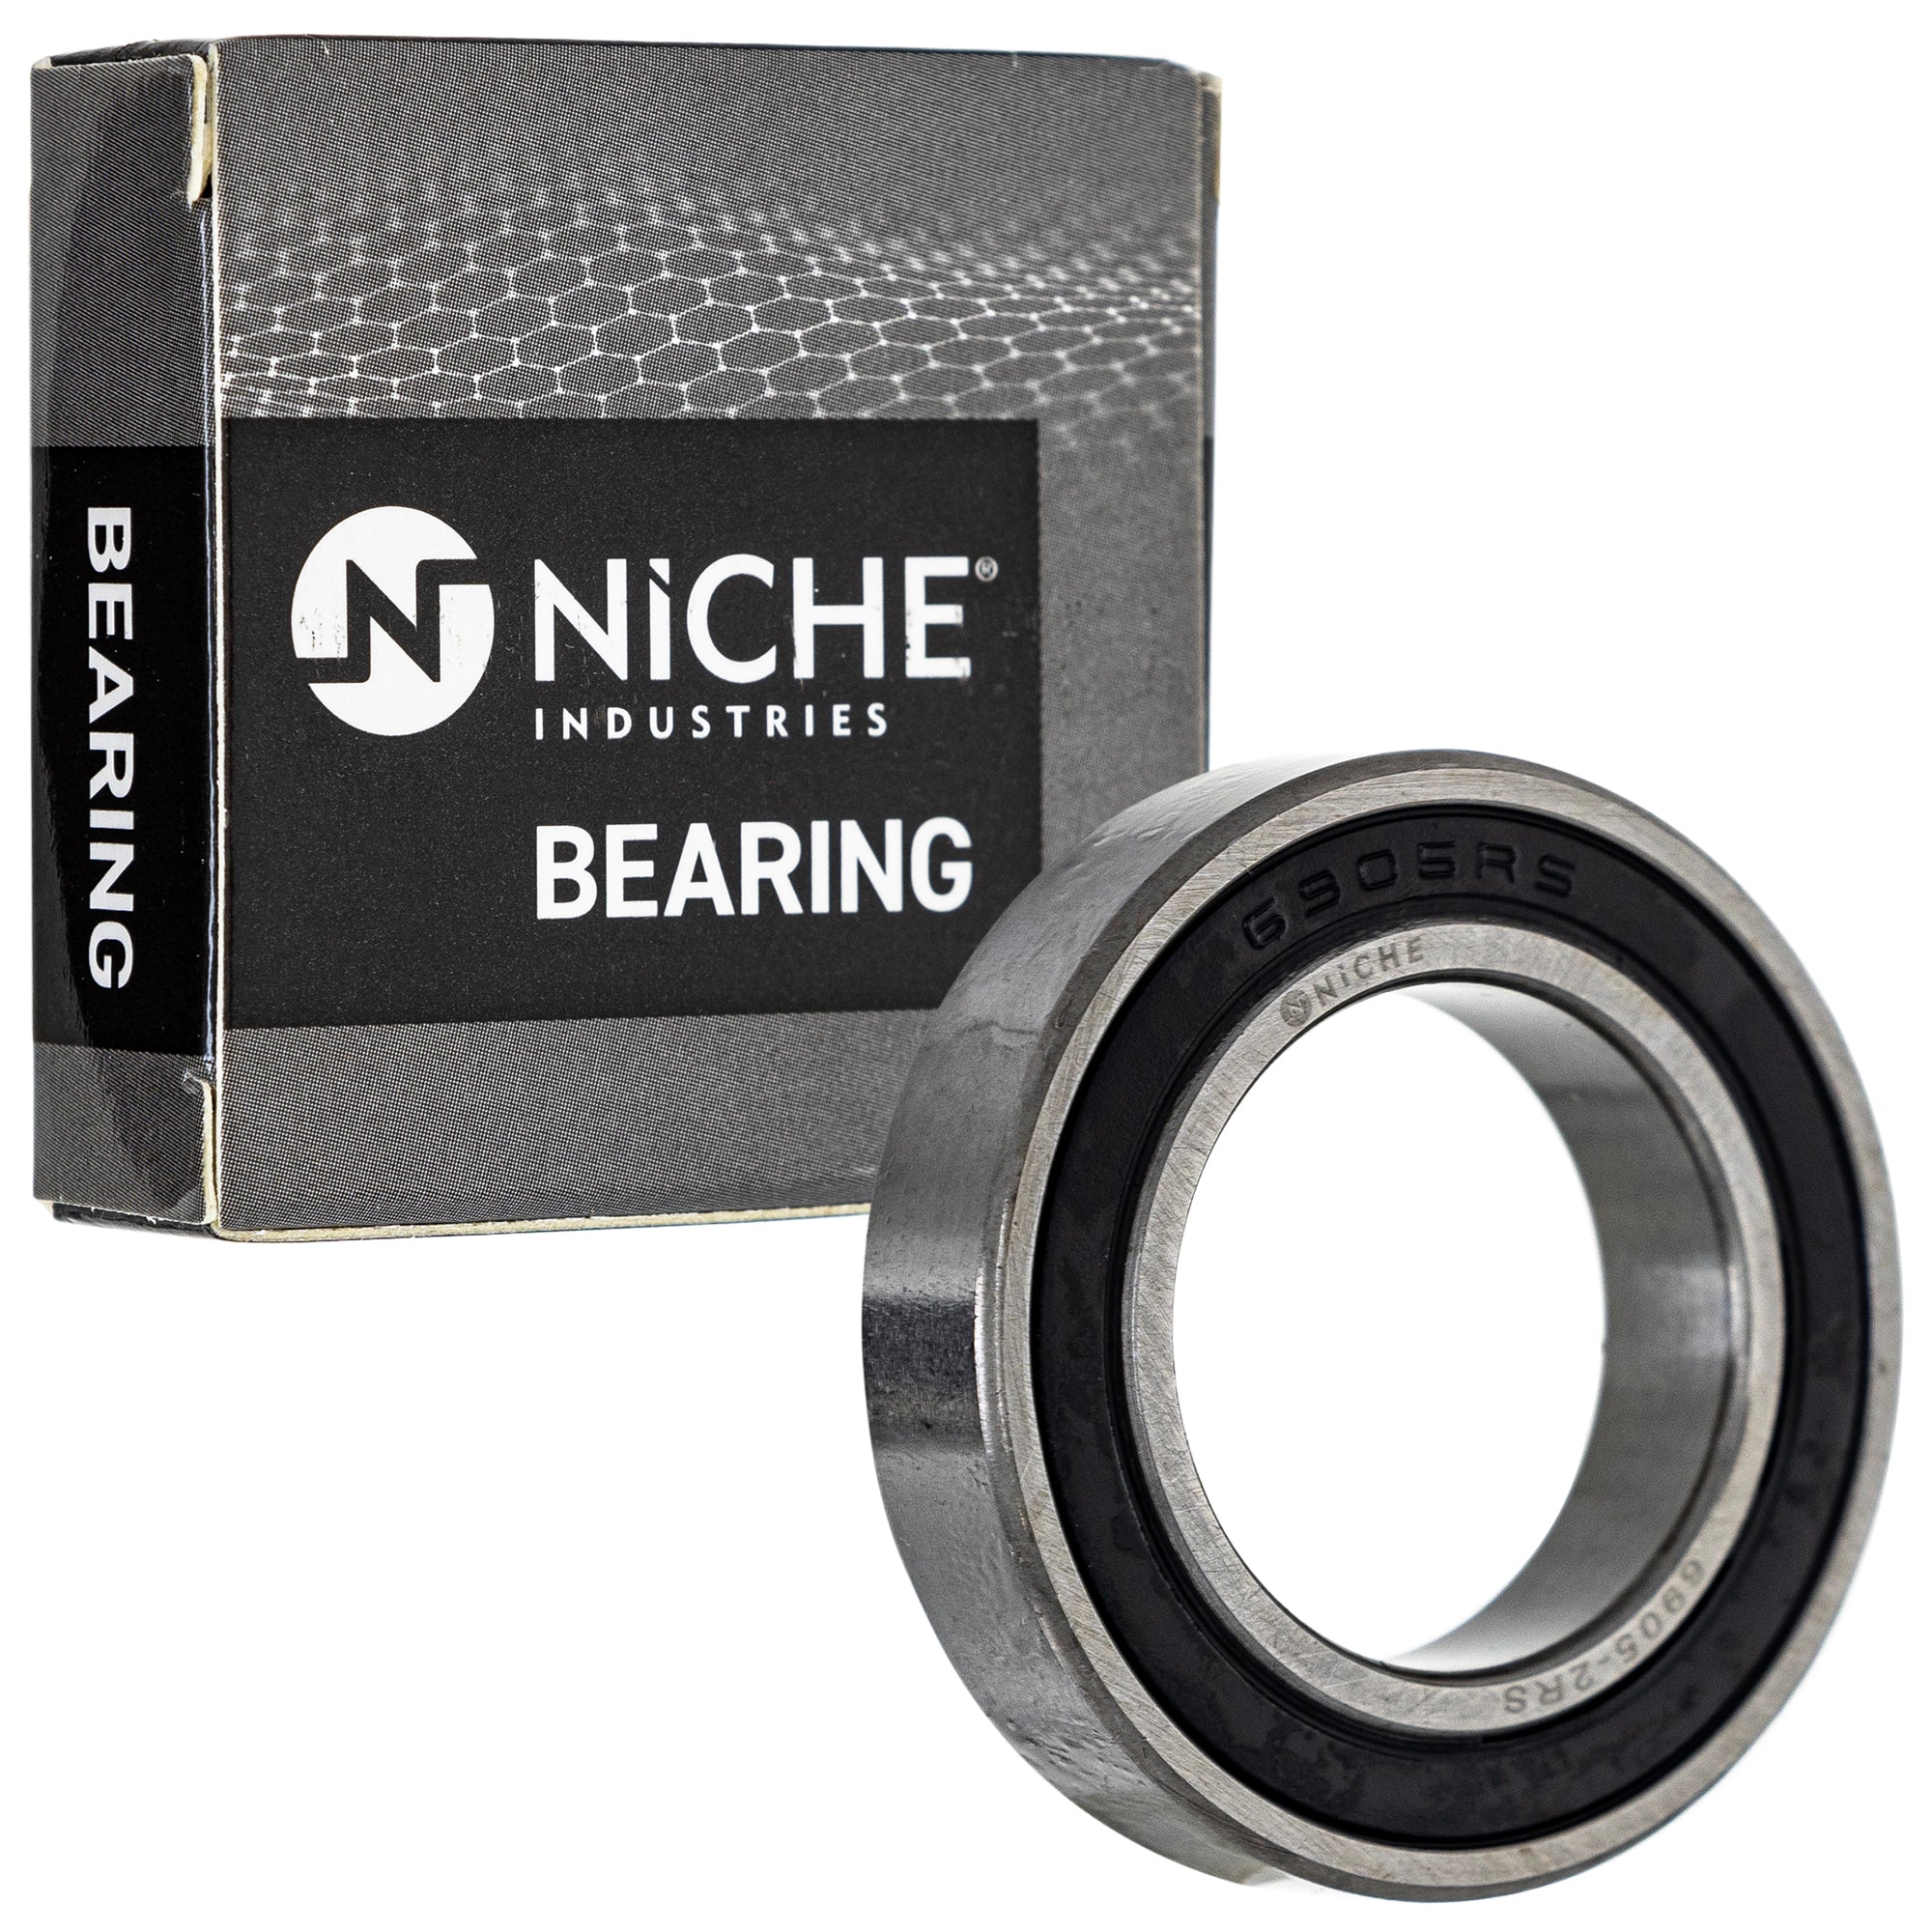 NICHE 519-CBB2251R Bearing 10-Pack for zOTHER VTX1800T3 VTX1800T2